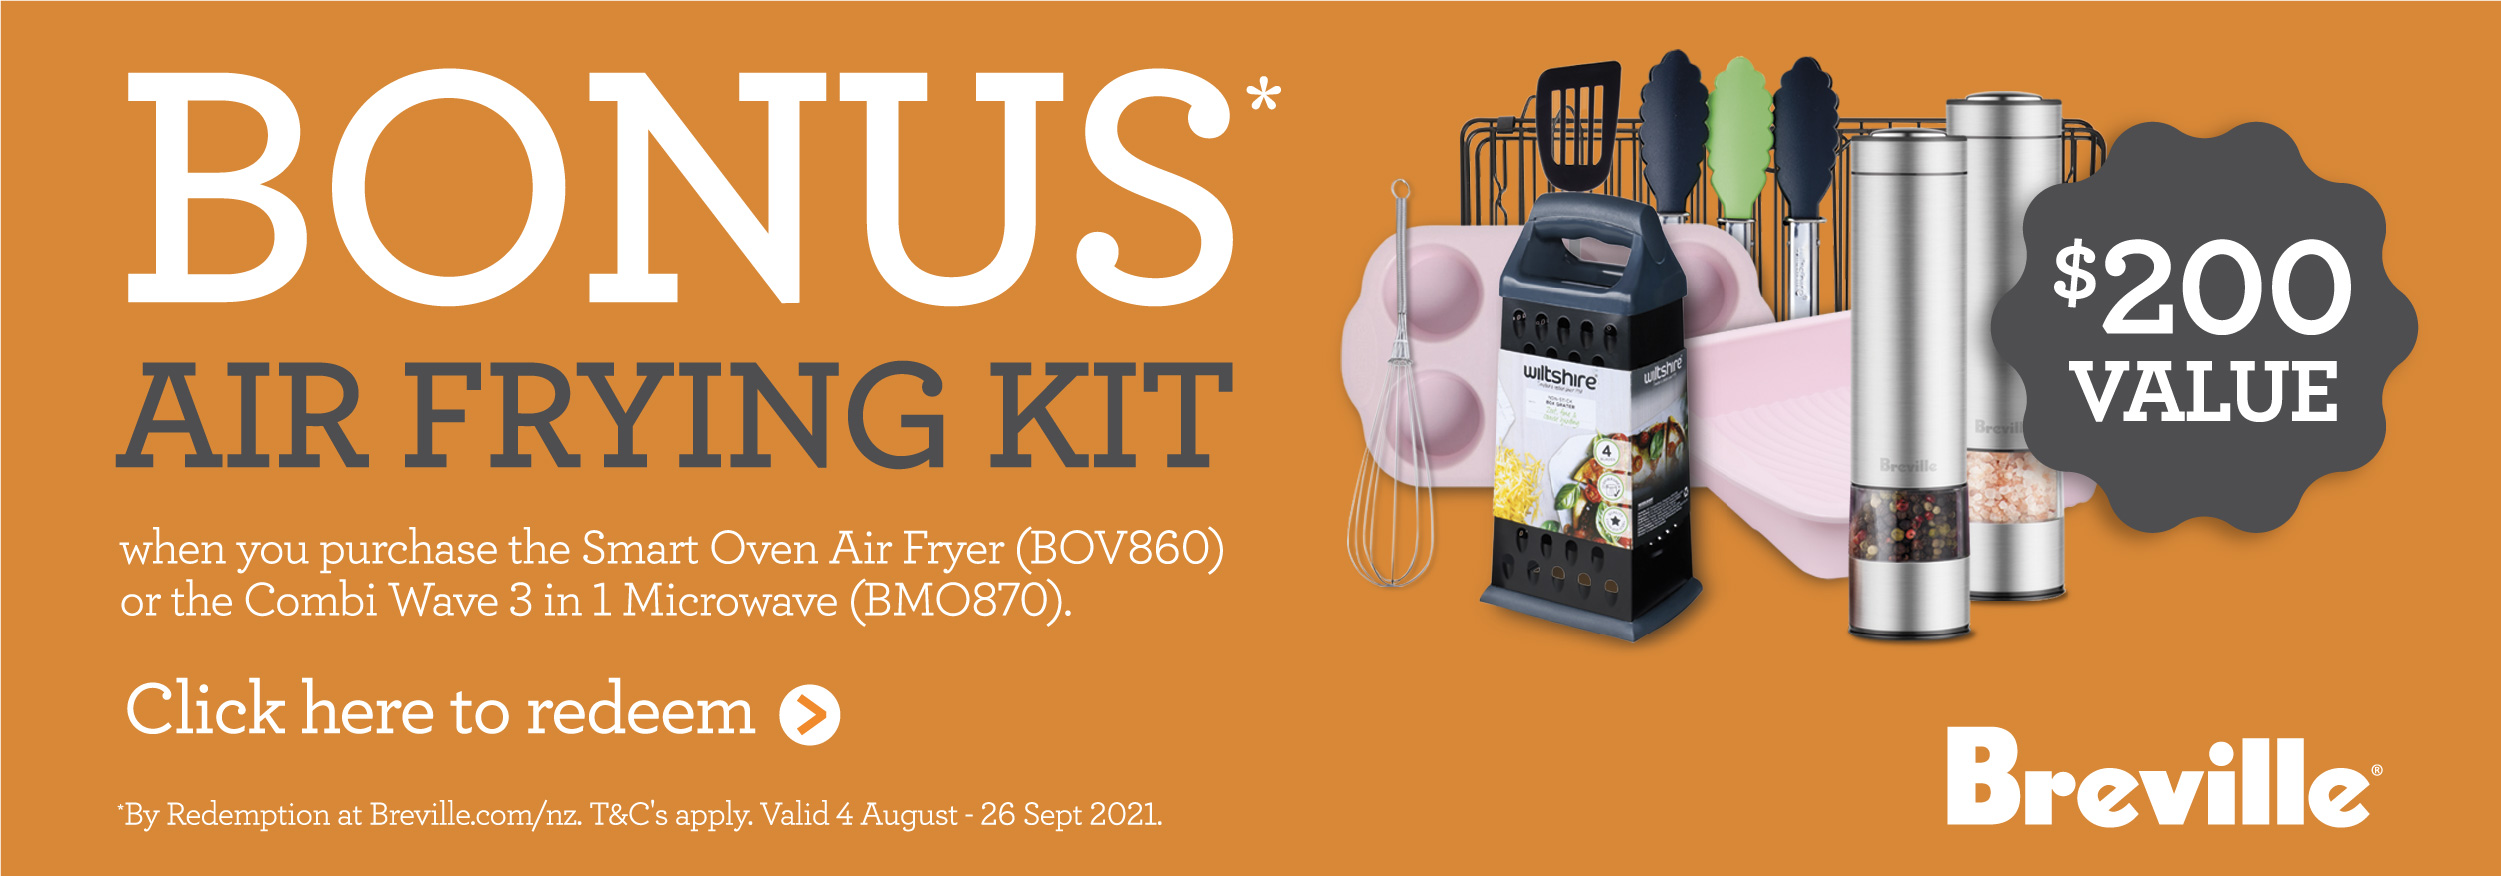 Bonus Air Frying Kit